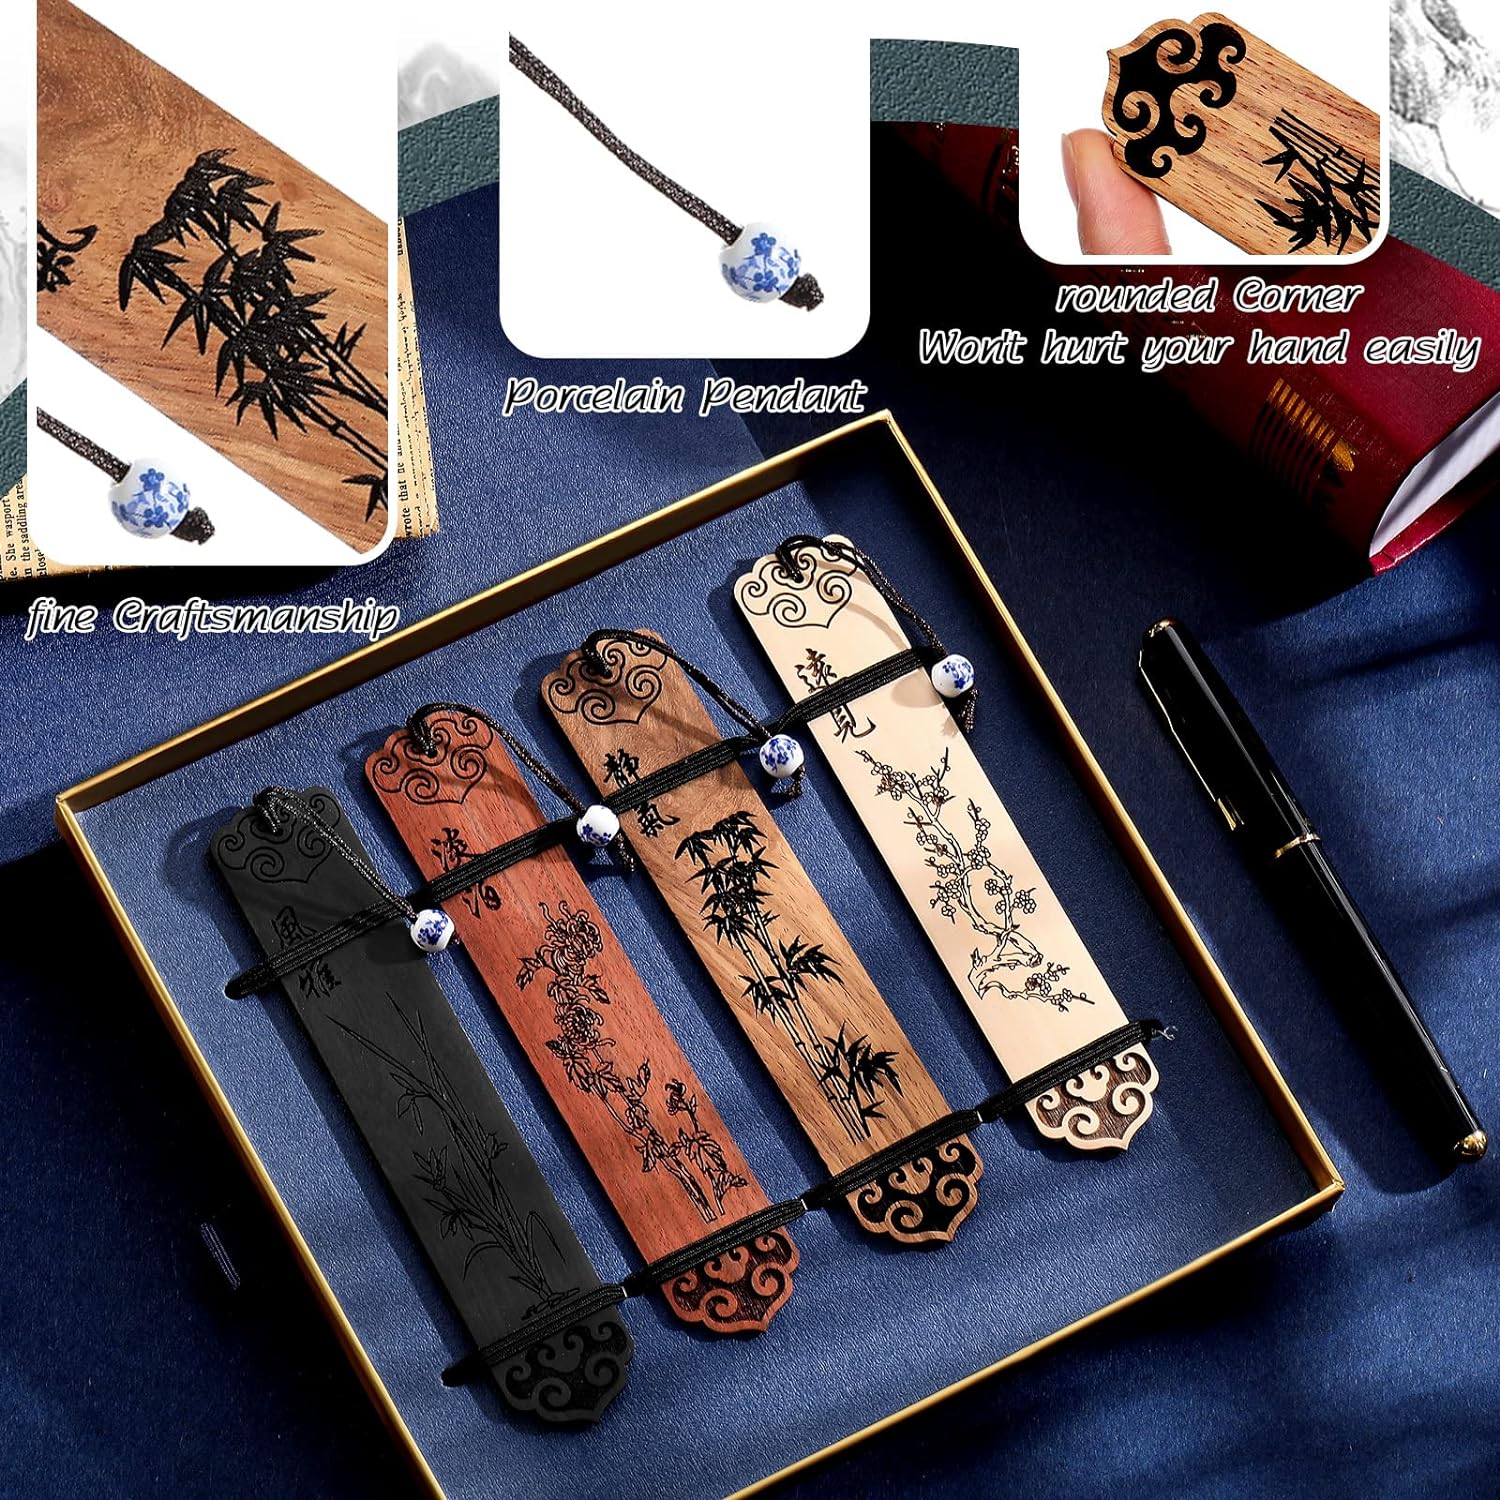 Handmade Natural Wooden Carving Book Mark Bookmarks Box Set